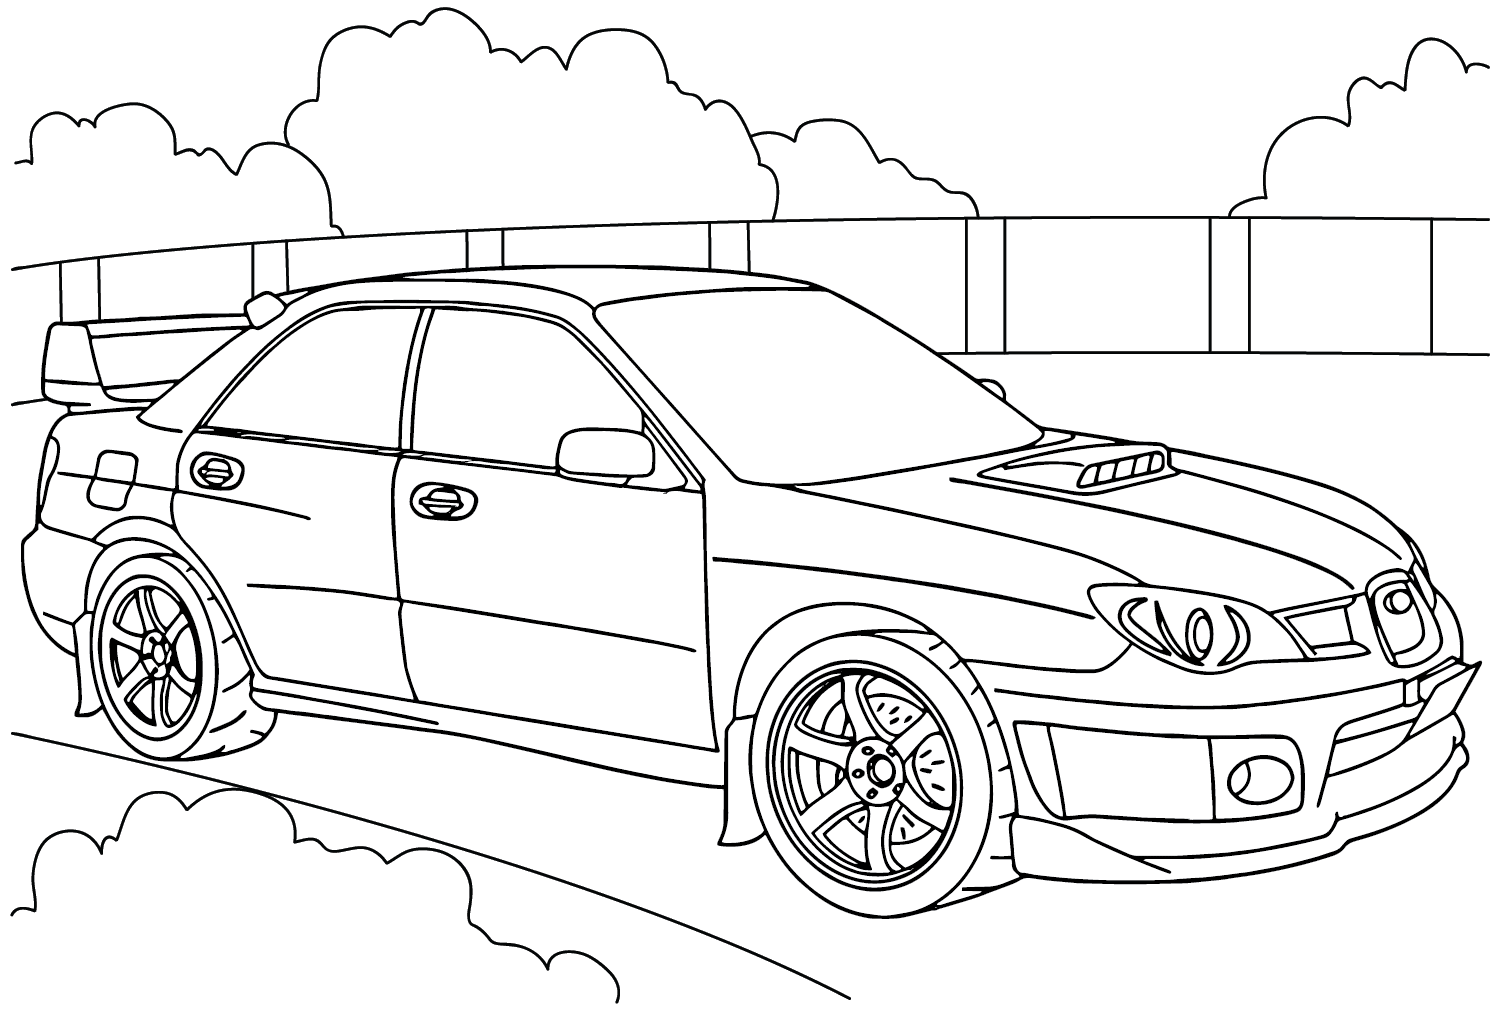 Subaru Coloring Page PDF from Subaru